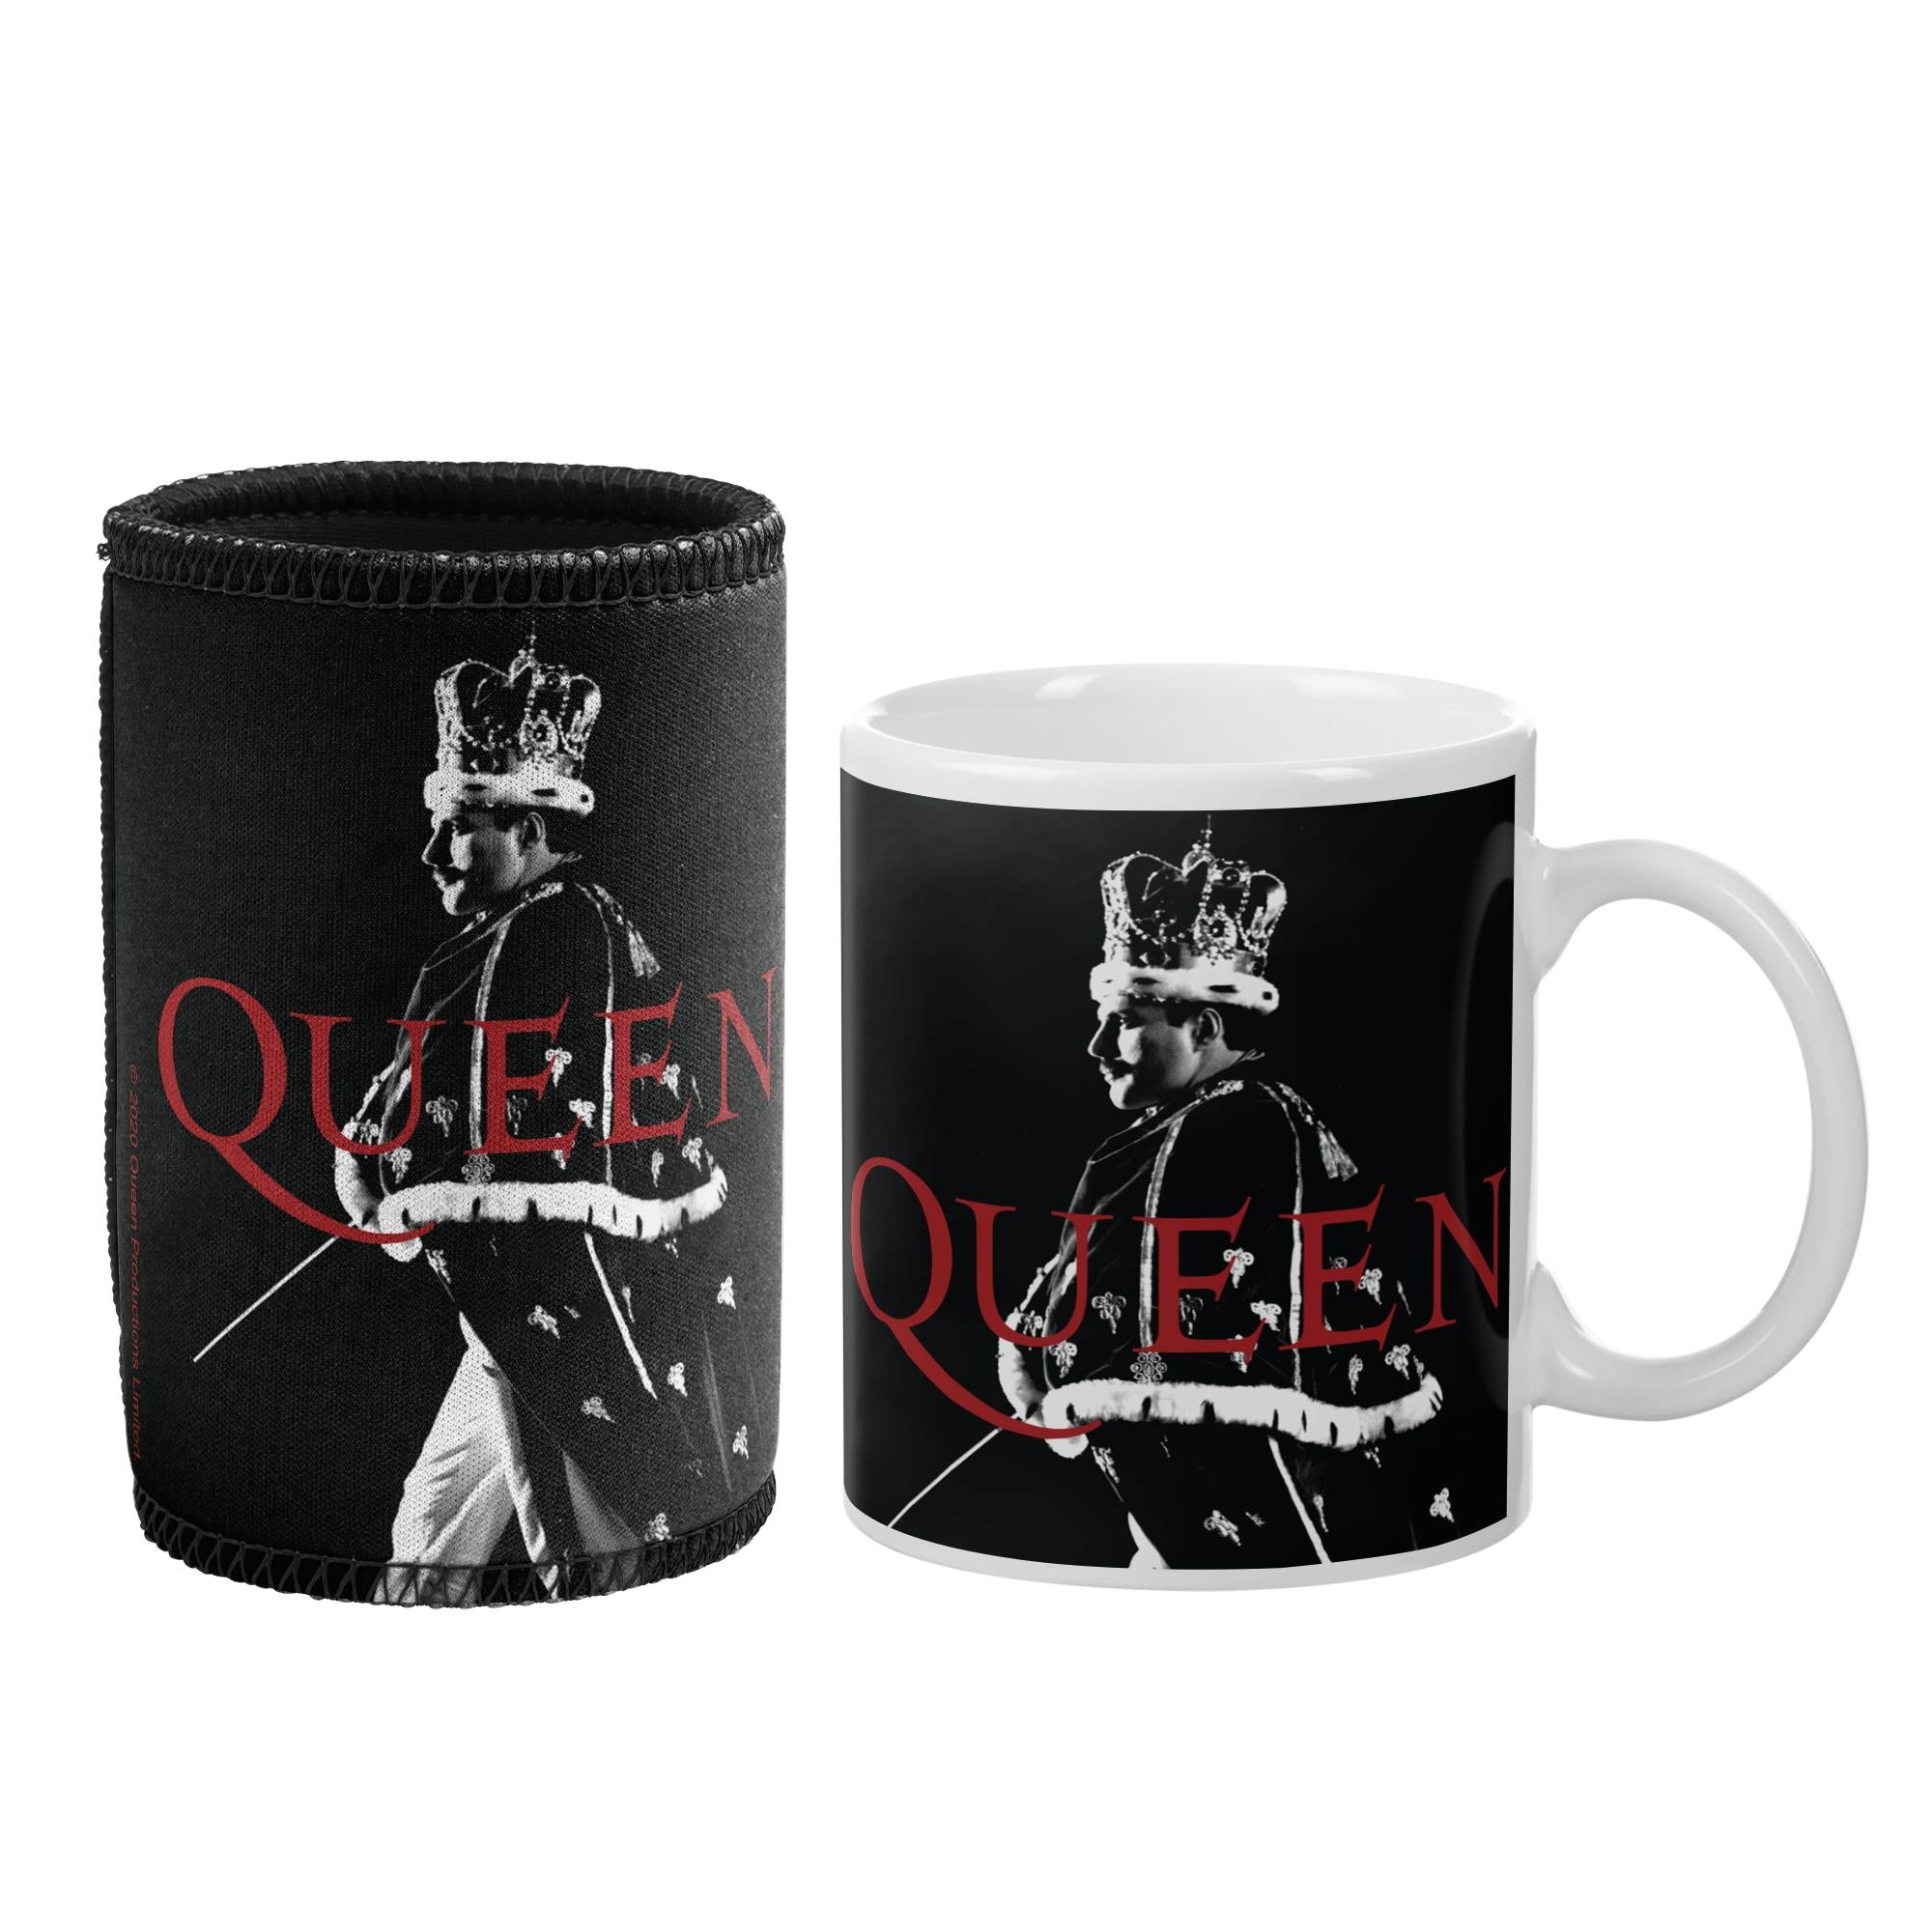 queen - mug & can cooler gift pack